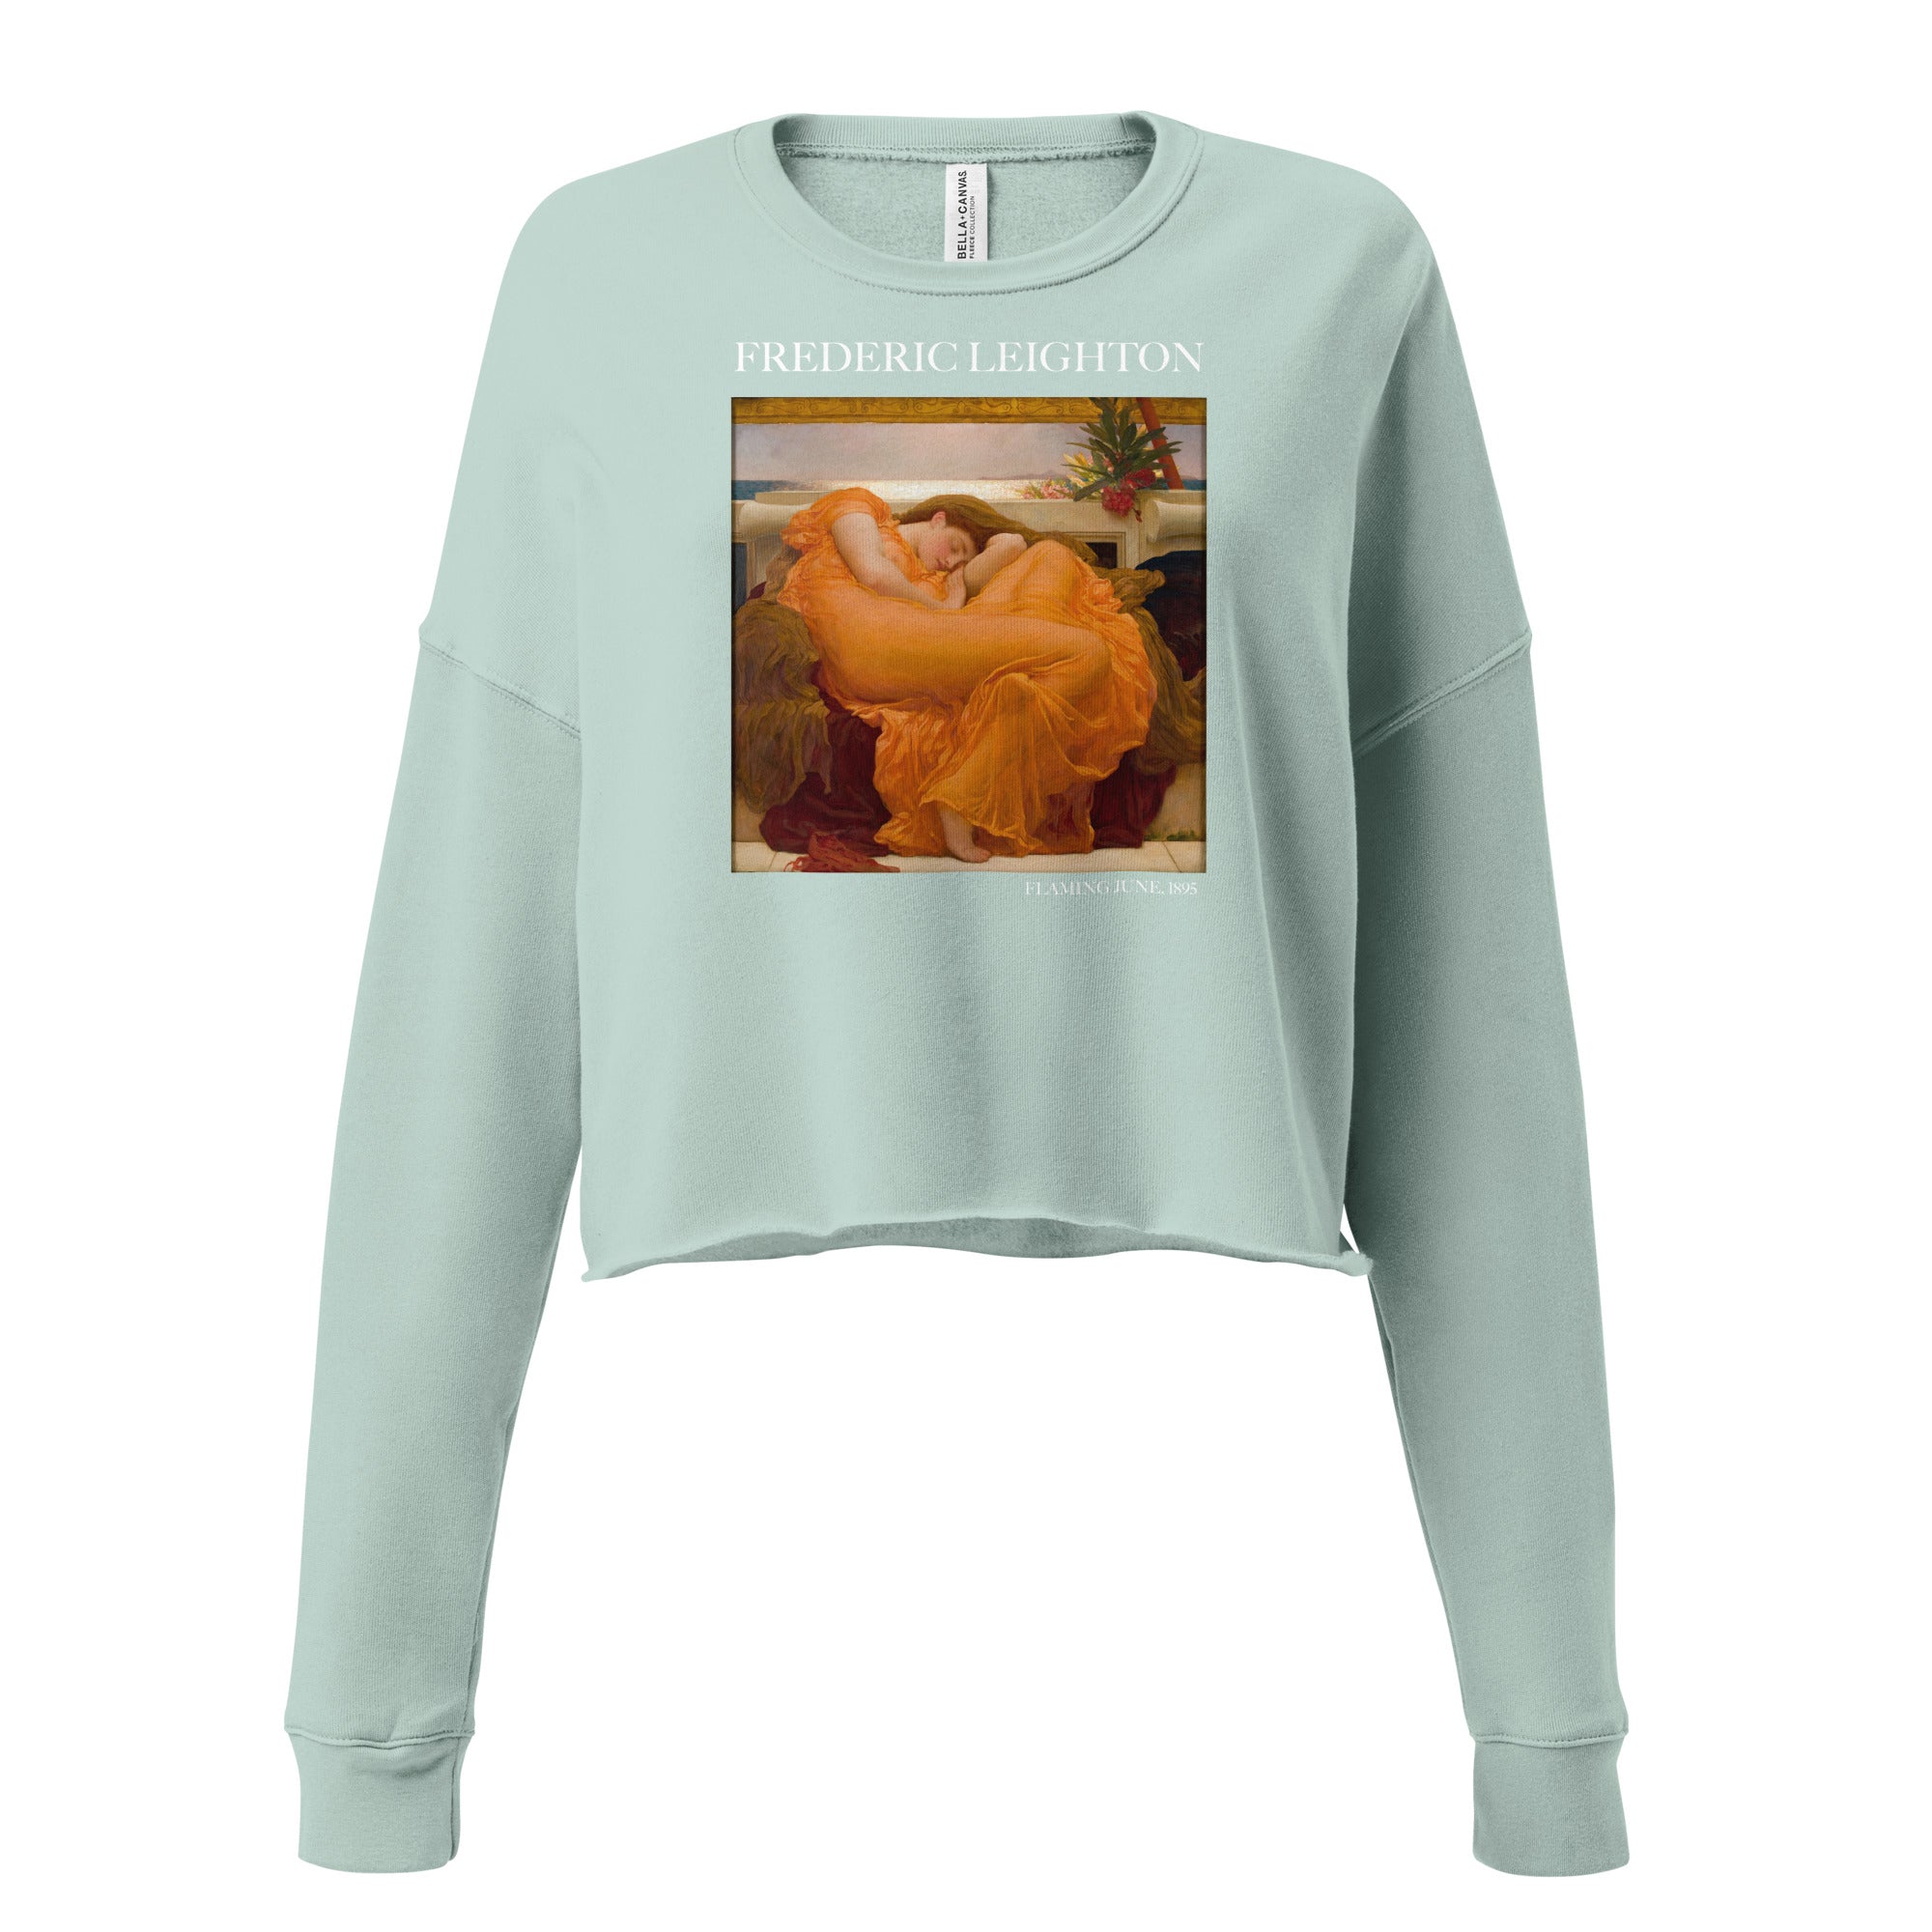 Frederic Leighton 'Flaming June' Famous Painting Cropped Sweatshirt | Premium Art Cropped Sweatshirt